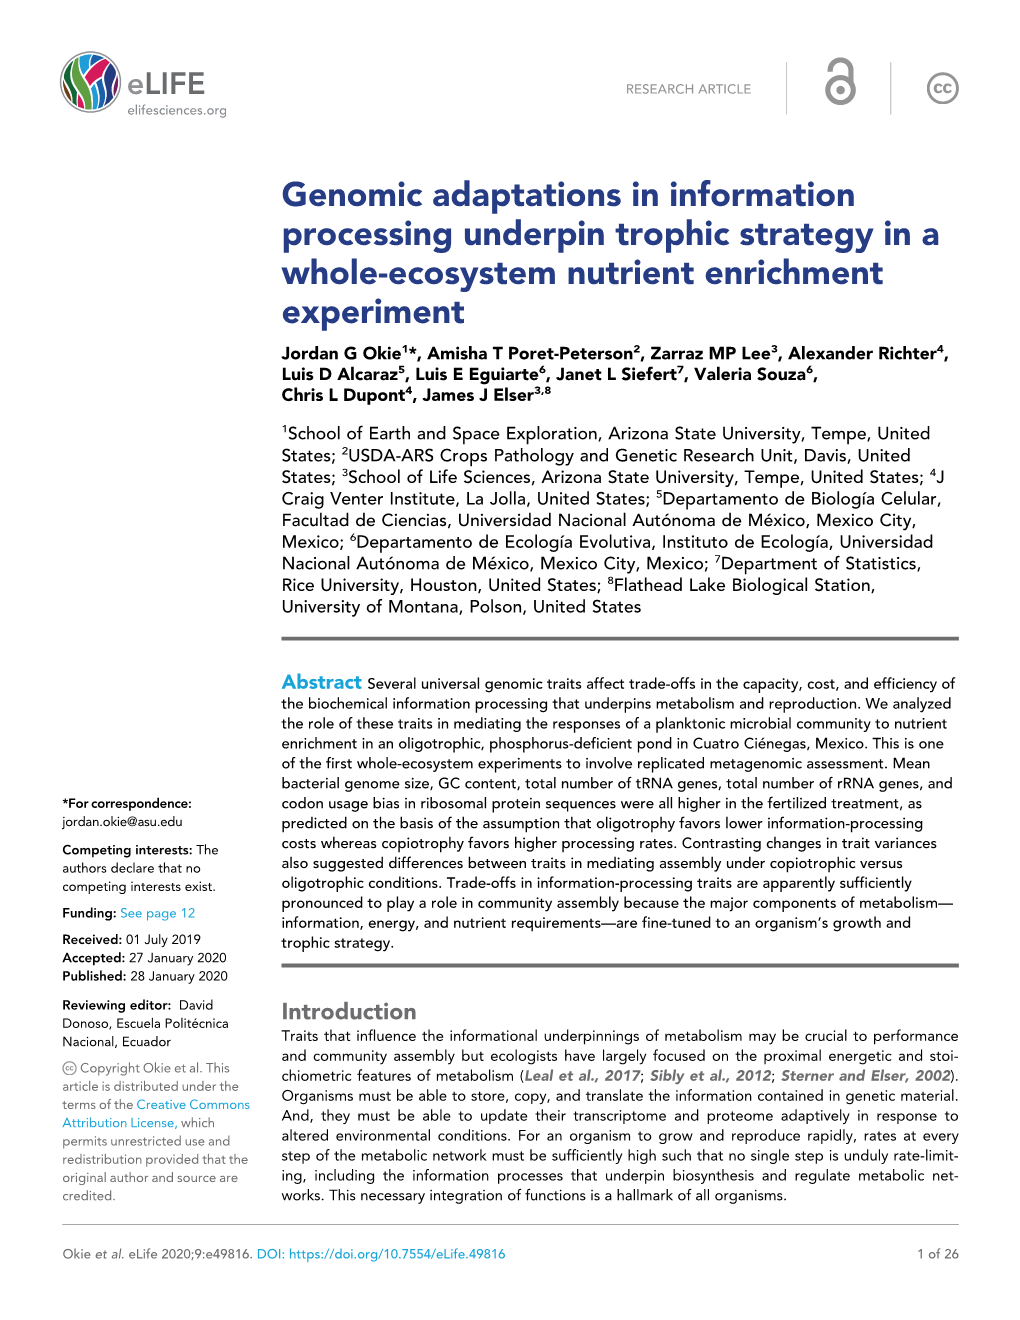 Genomic Adaptations in Information Processing Underpin Trophic